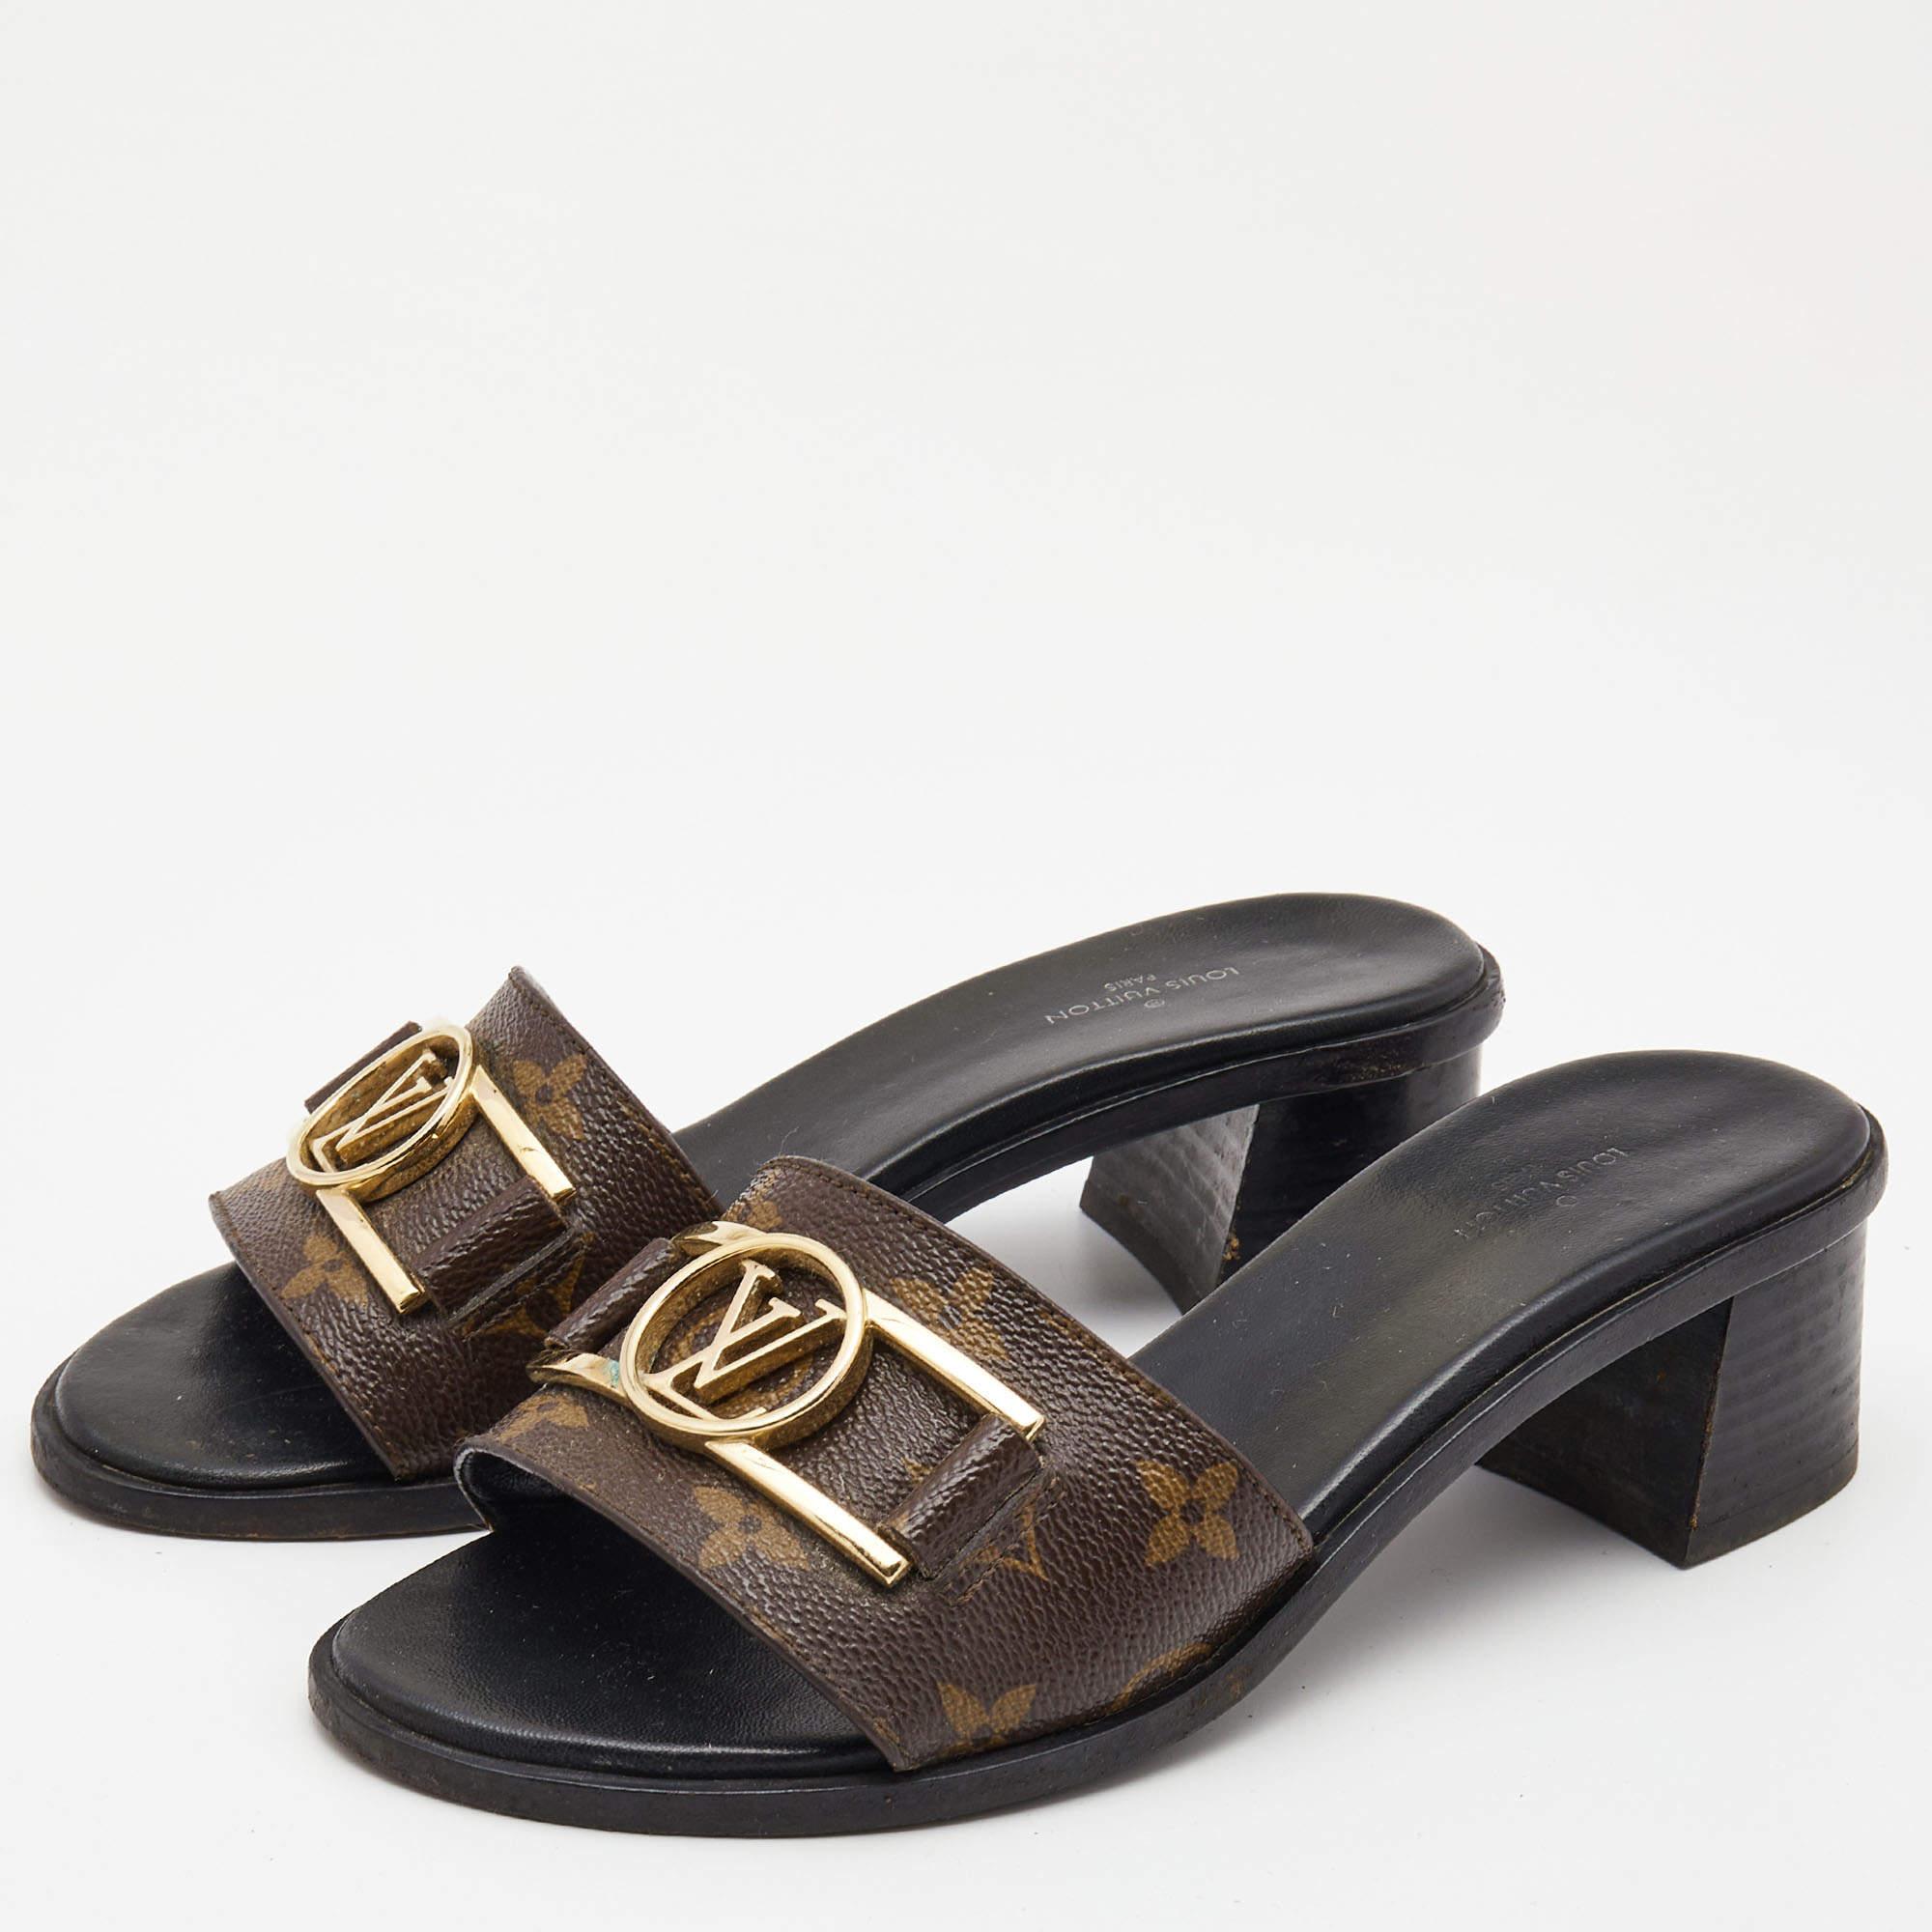 Louis Vuitton - Authenticated Lock It Sandal - Leather Black Plain for Women, Never Worn